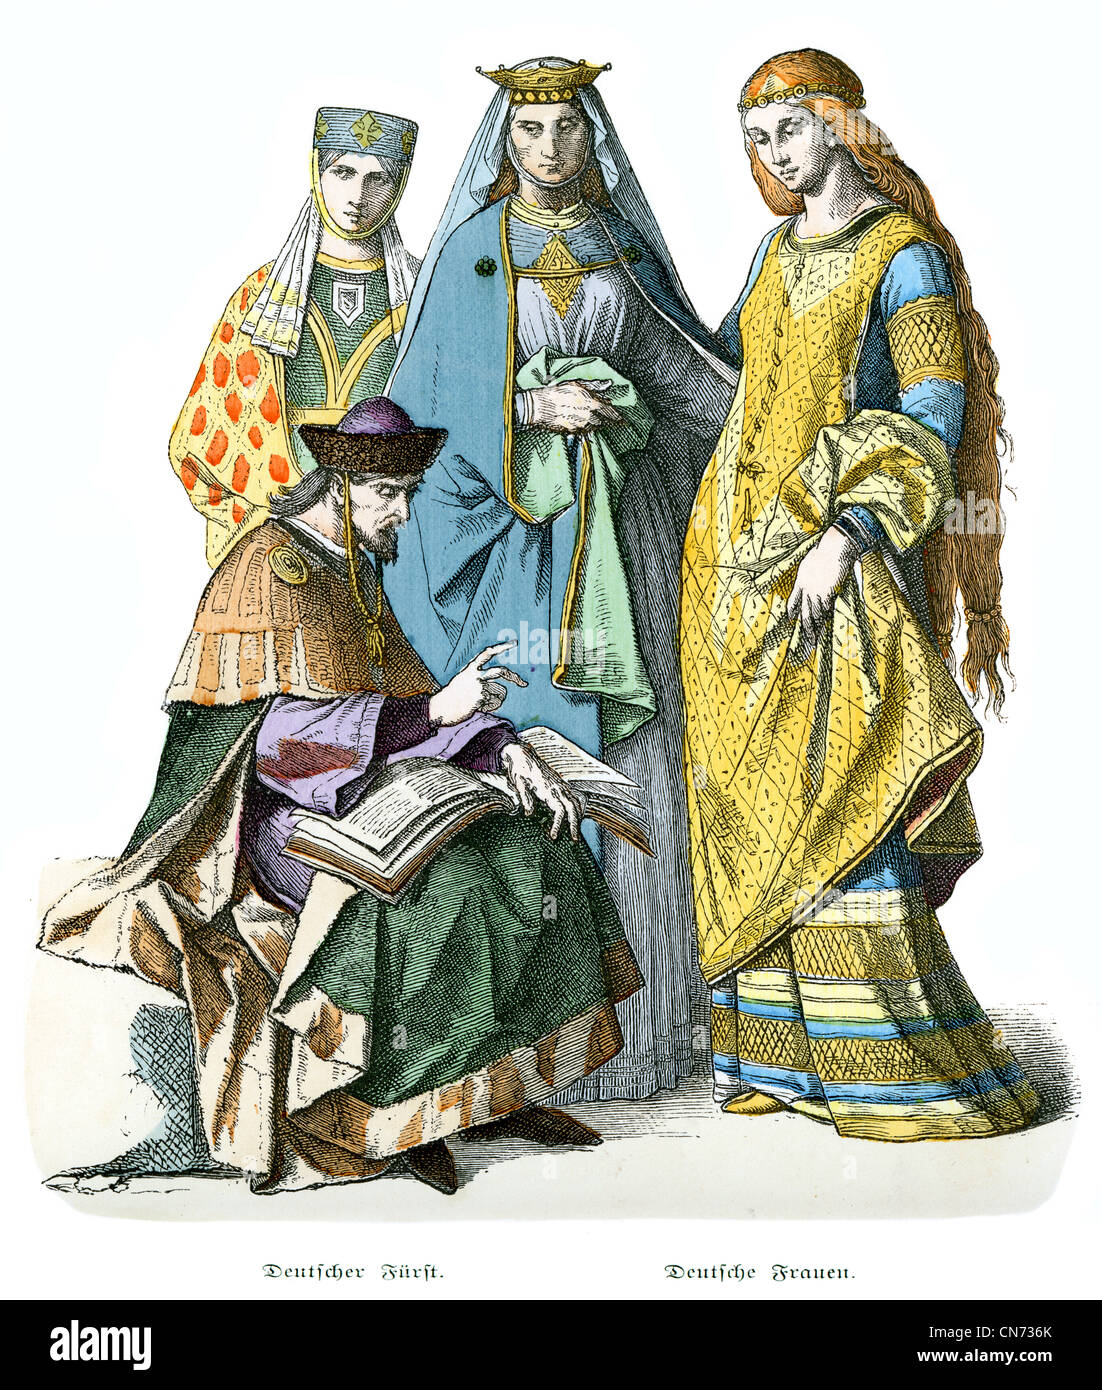 13th Century German prince and women Stock Photo